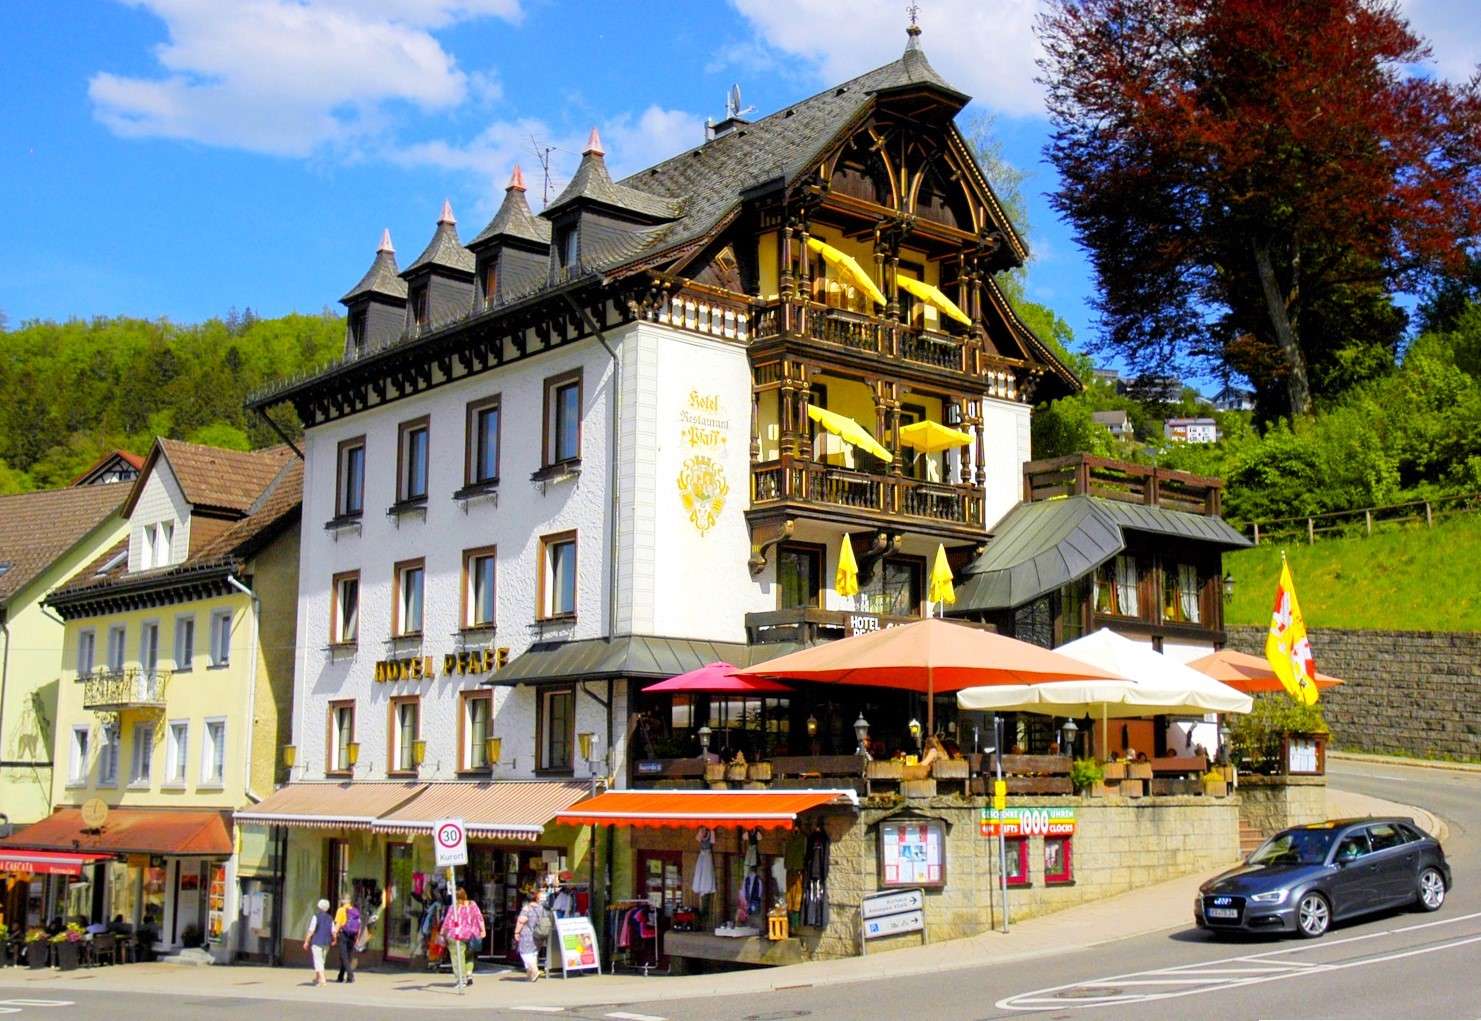 Triberg im Schwarzwald - хотел Pfaff (Германия) онлайн пъзел